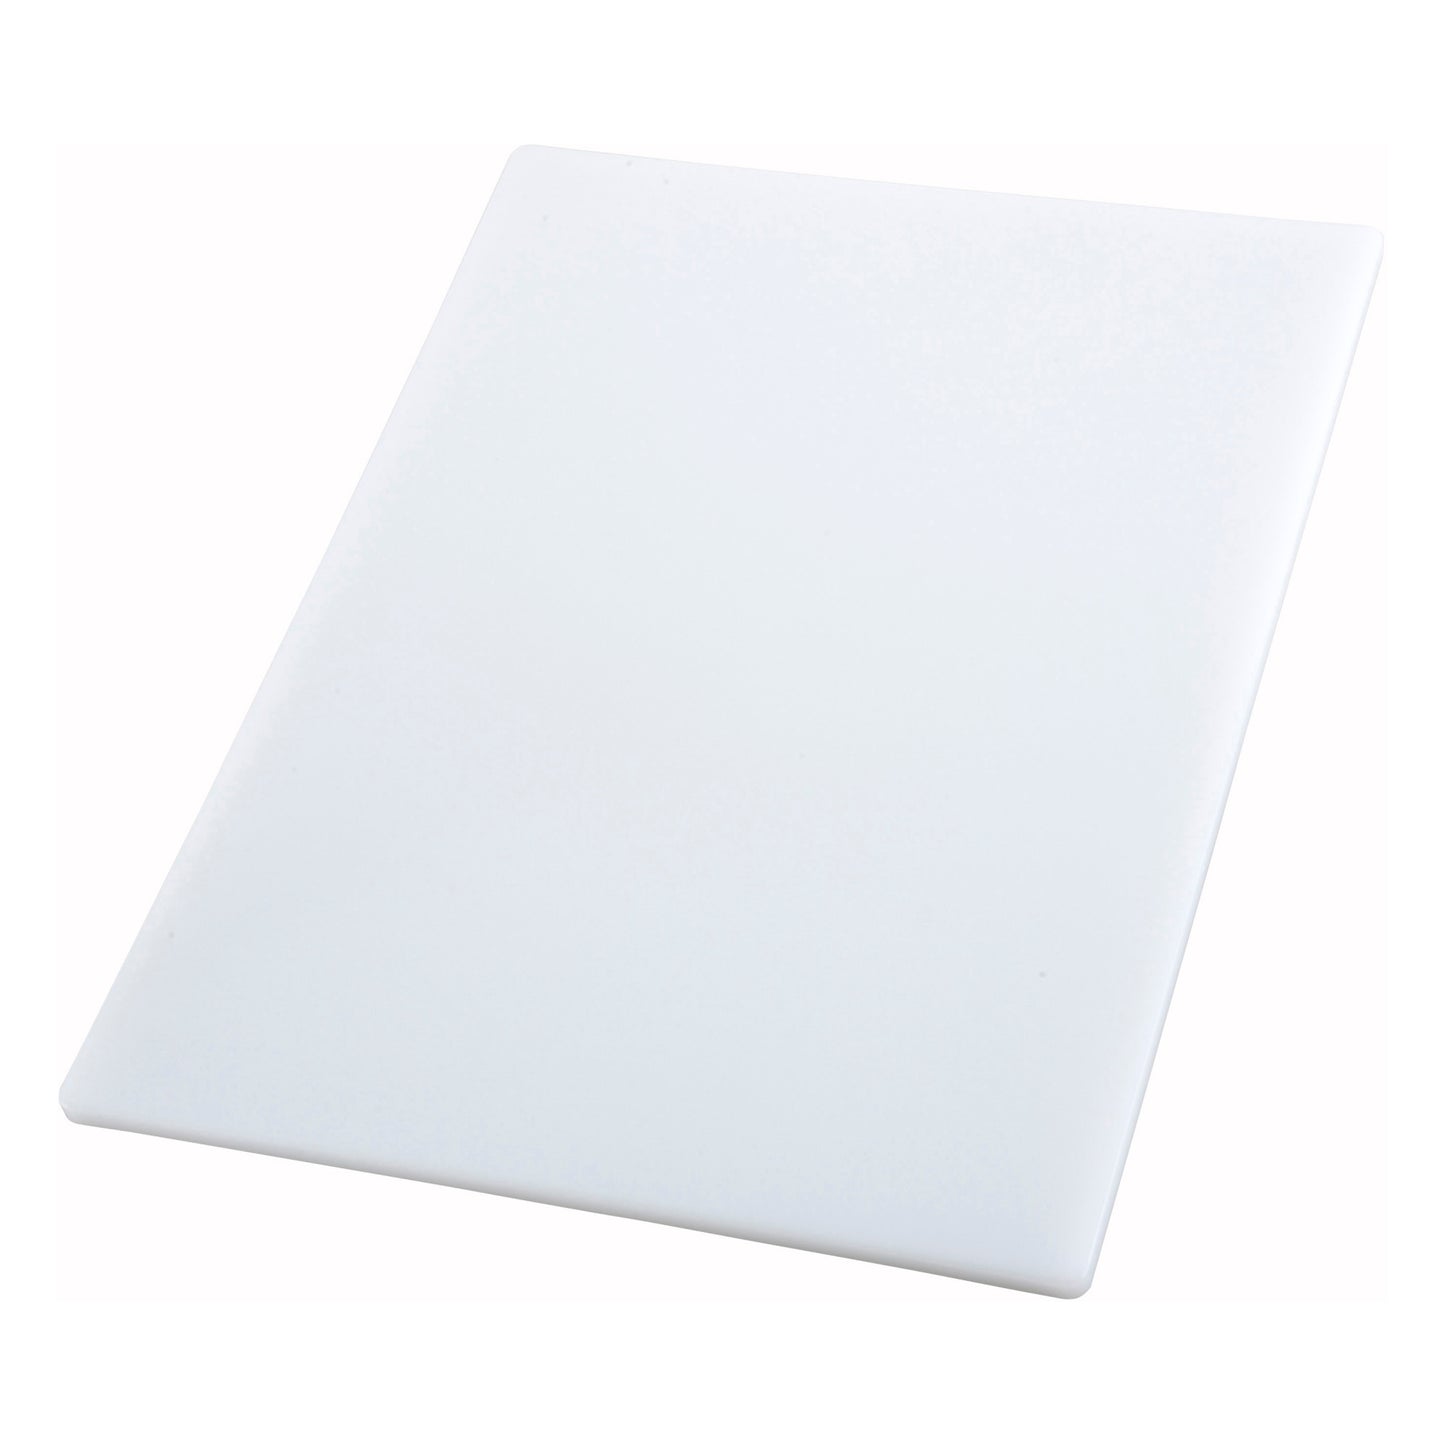 CBWT-1830 - White Rectangular Cutting Board - 18" x 30" x 1/2"